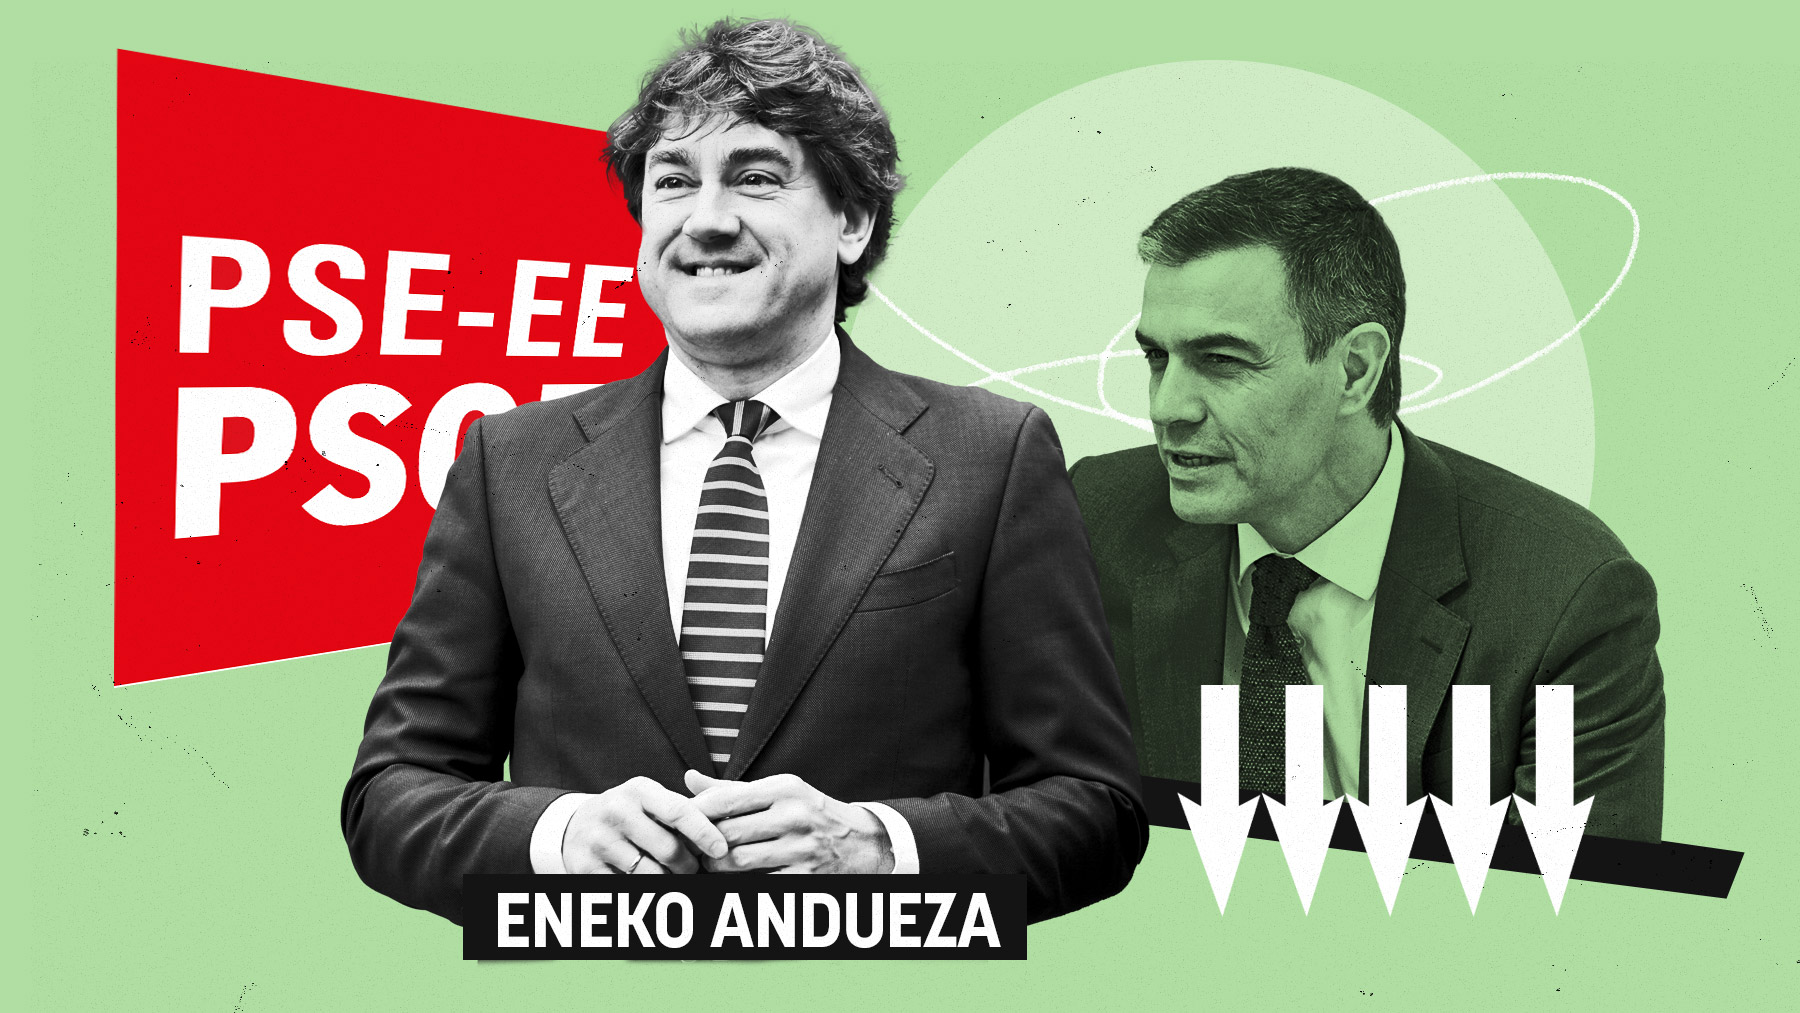 El candidato a lehendakari, Eneko Andueza, y Pedro Sánchez.